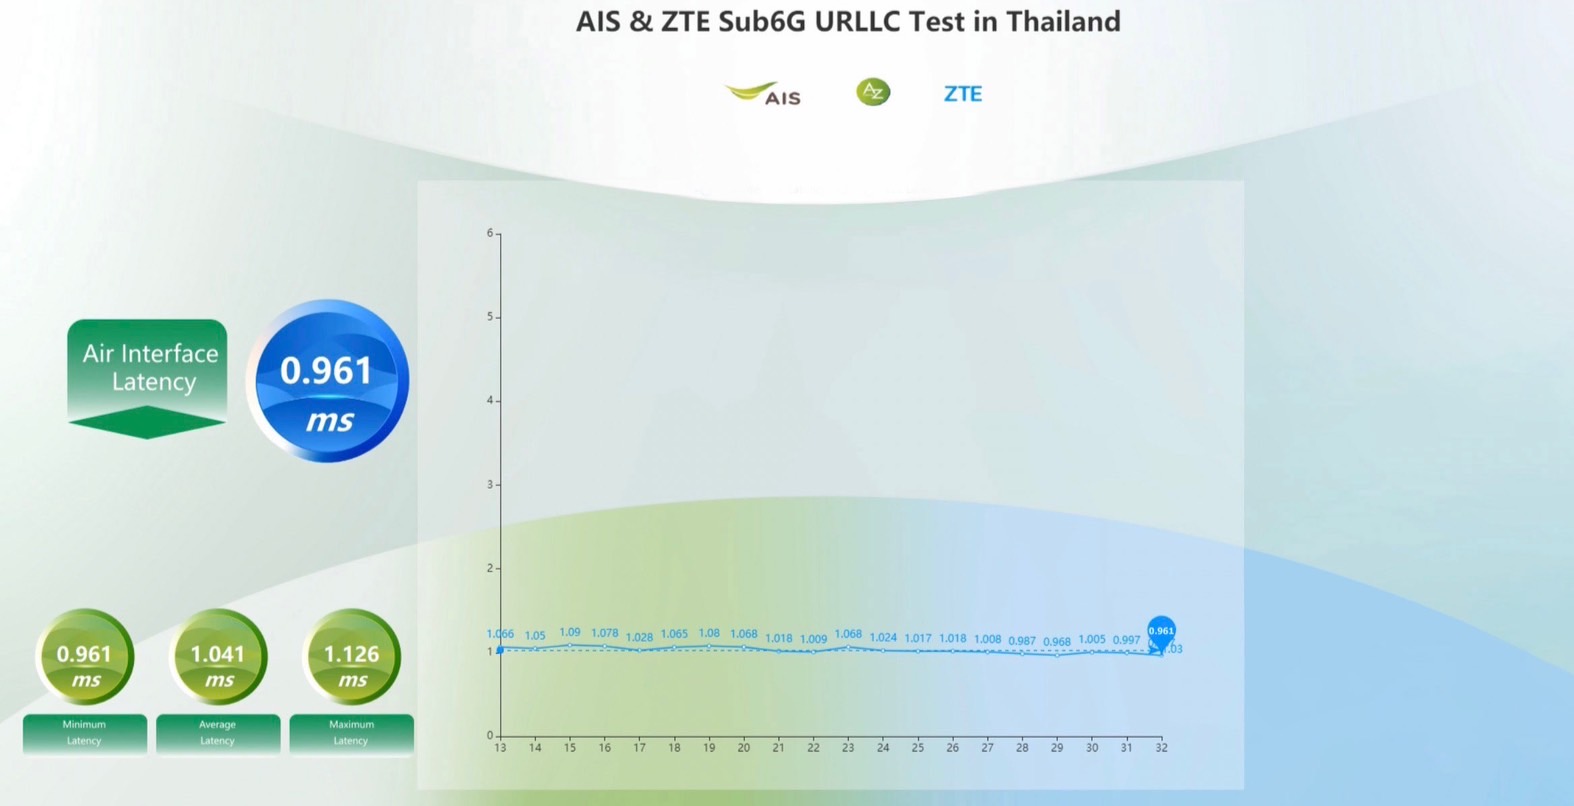 Pic 04 AIS ZTE ทดสอบ URLLC โชว์ความหน่วงต่ำ 1 มิลลิวินาทีบนเครือข่าย 5G คลื่น 2.6 GHz | A-Z Center | AIS - ZTE ทดสอบ URLLC โชว์ความหน่วงต่ำ 1 มิลลิวินาทีบน 5G รายแรกในไทย เตรียมตอบโจทย์คลาวด์เกมมิ่ง และ Smart Industry